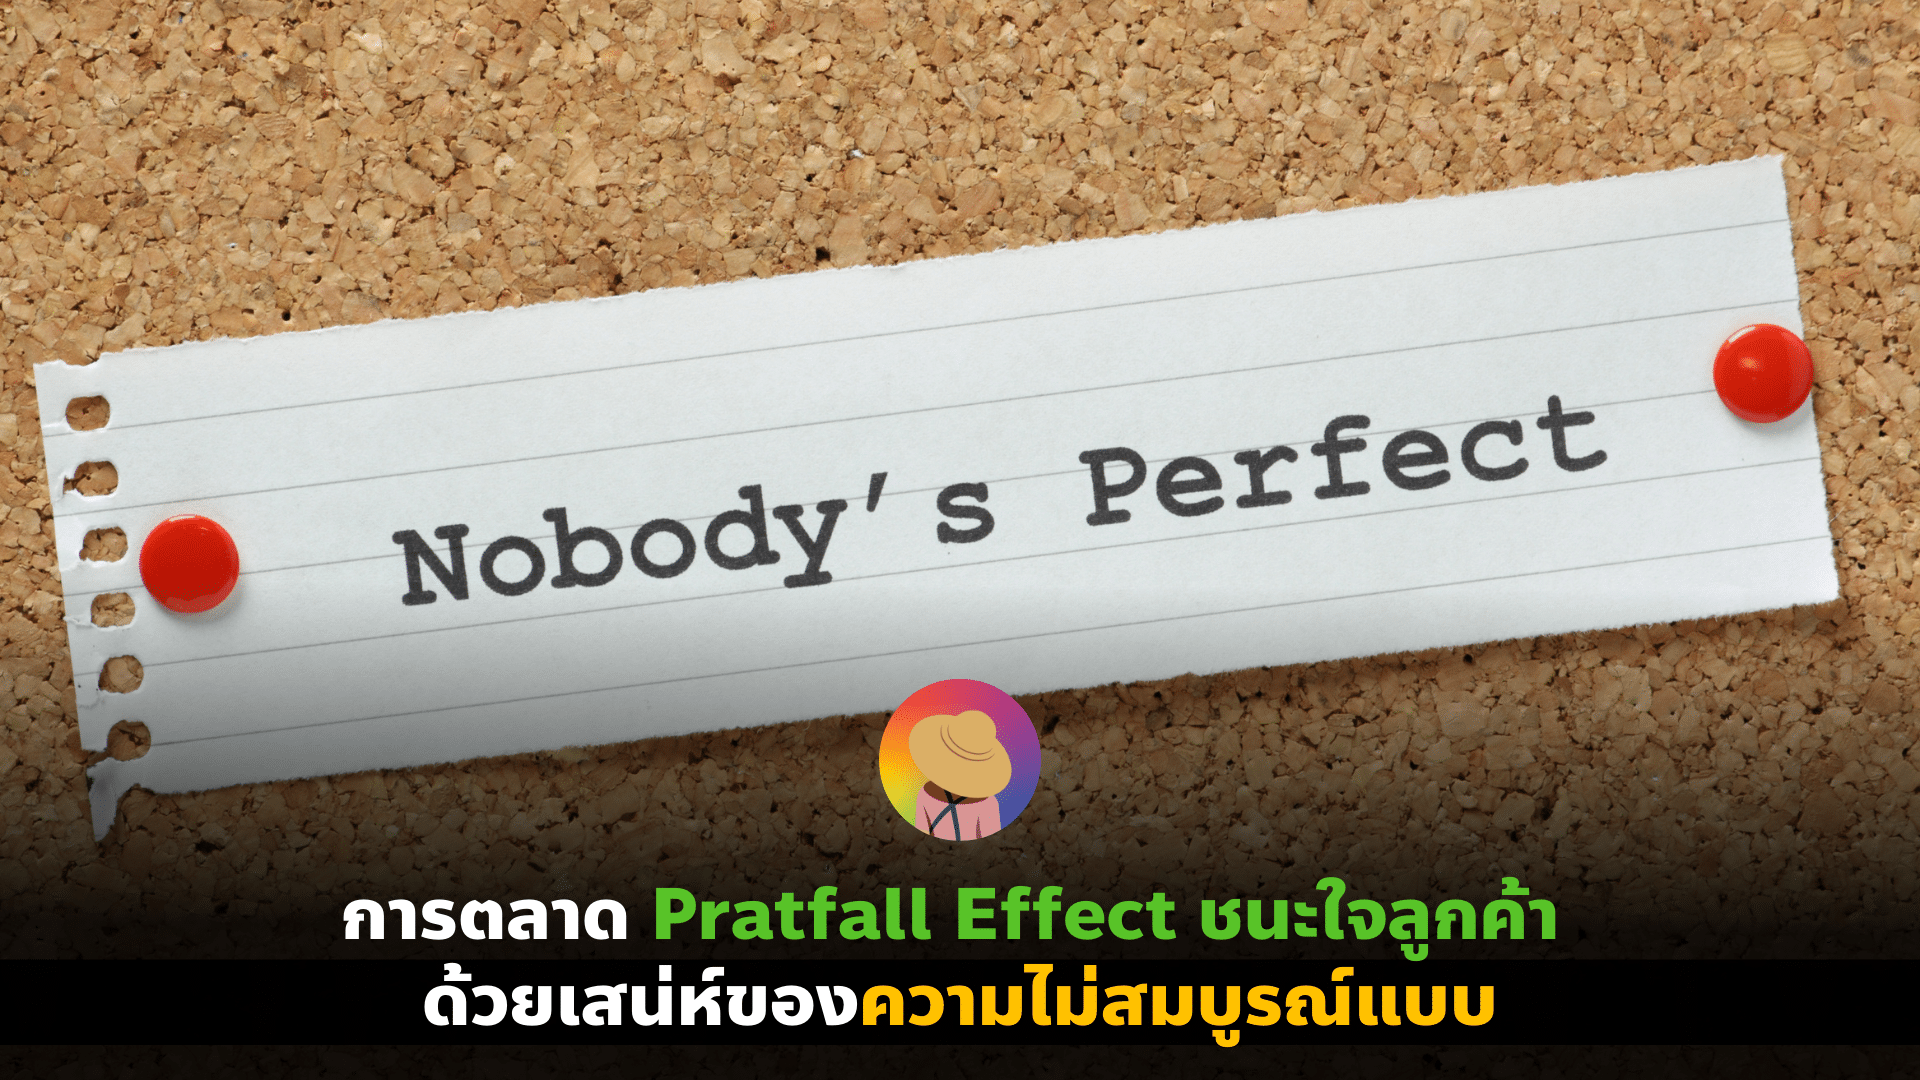 Pratfall Effect การตลาดไม่สมบูรณ์แบบ